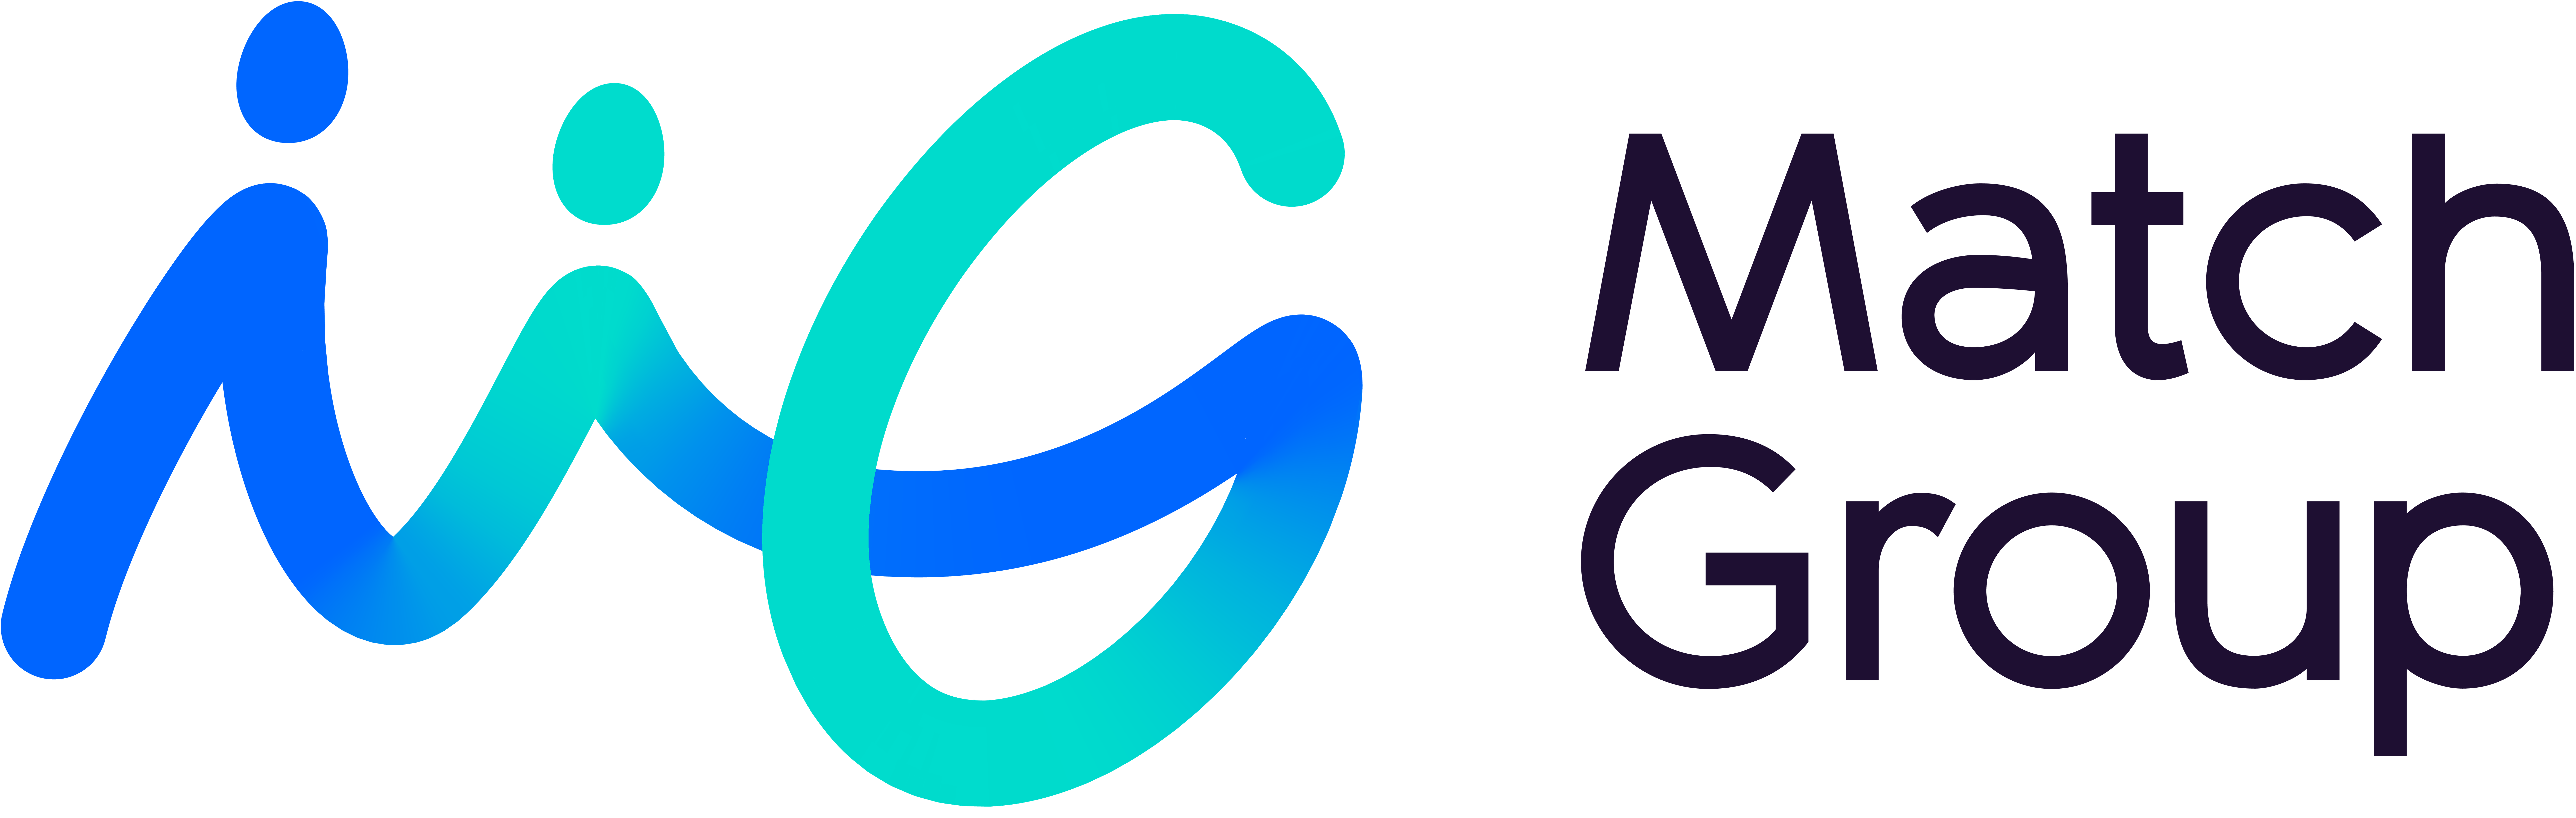 Logo Match Group Inc.